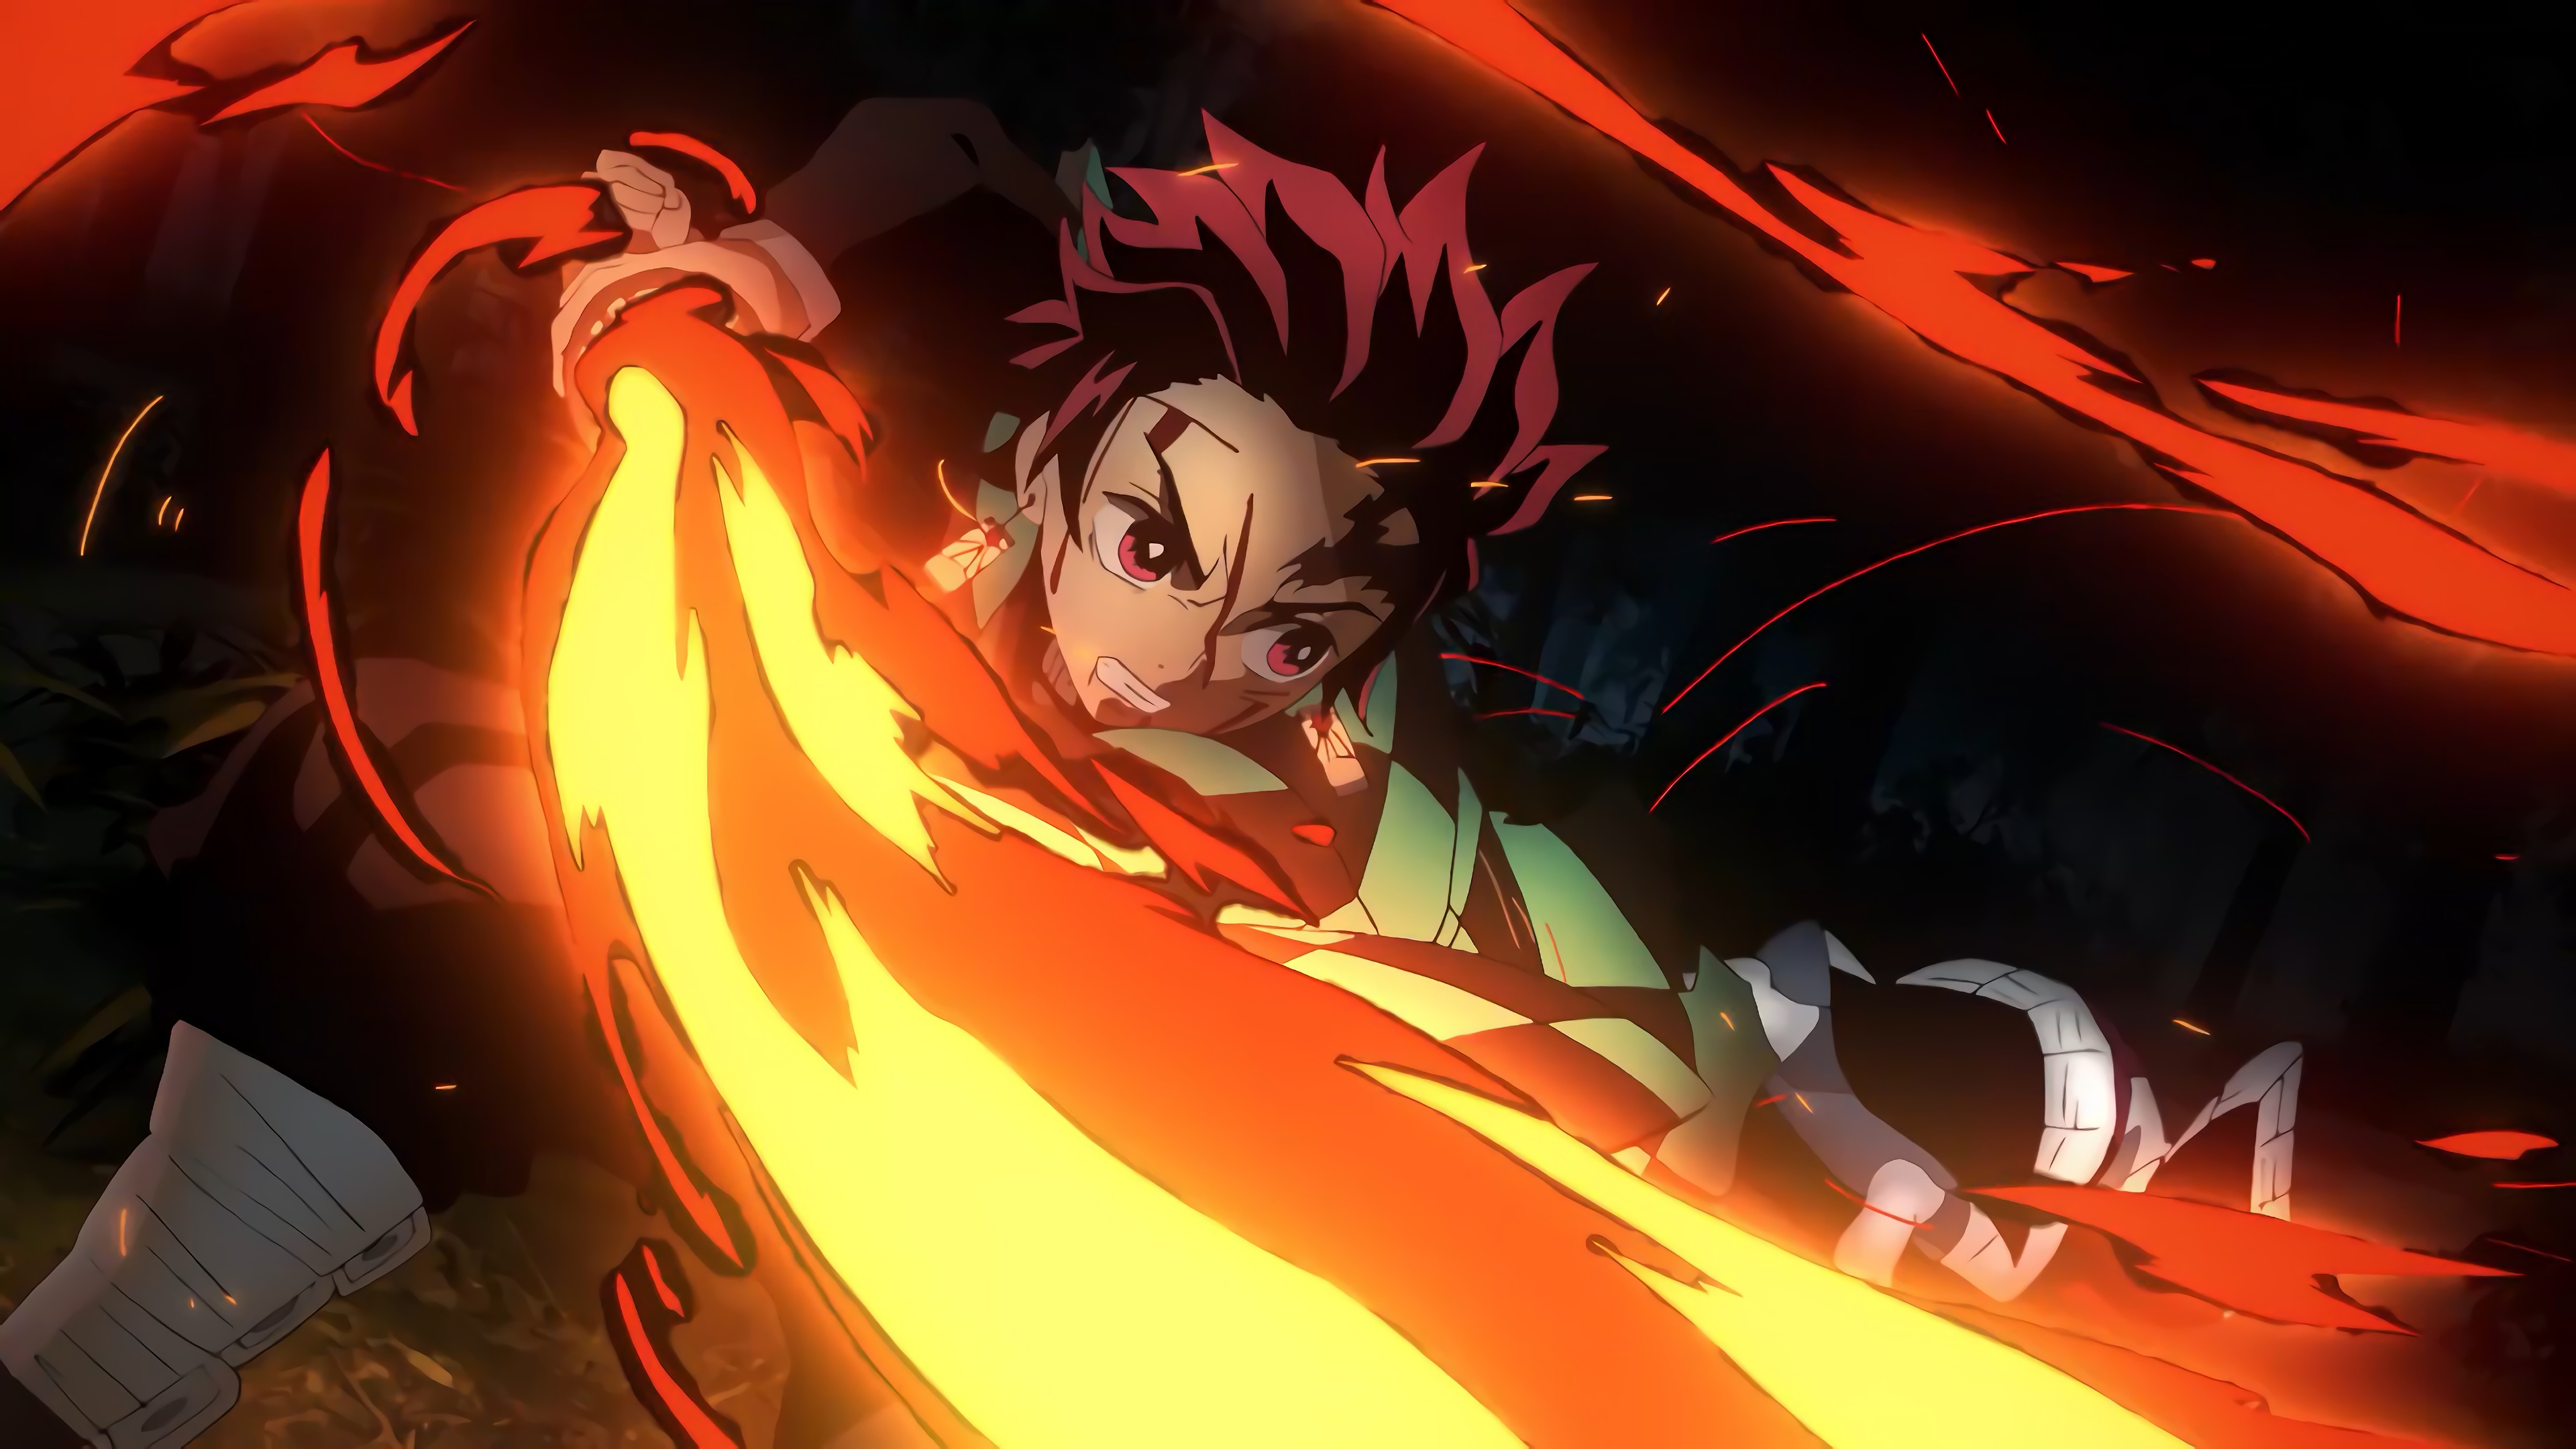 Fondos de pantalla Tanjiro with Flaming Katana from anime Kimetsu no Yaiba